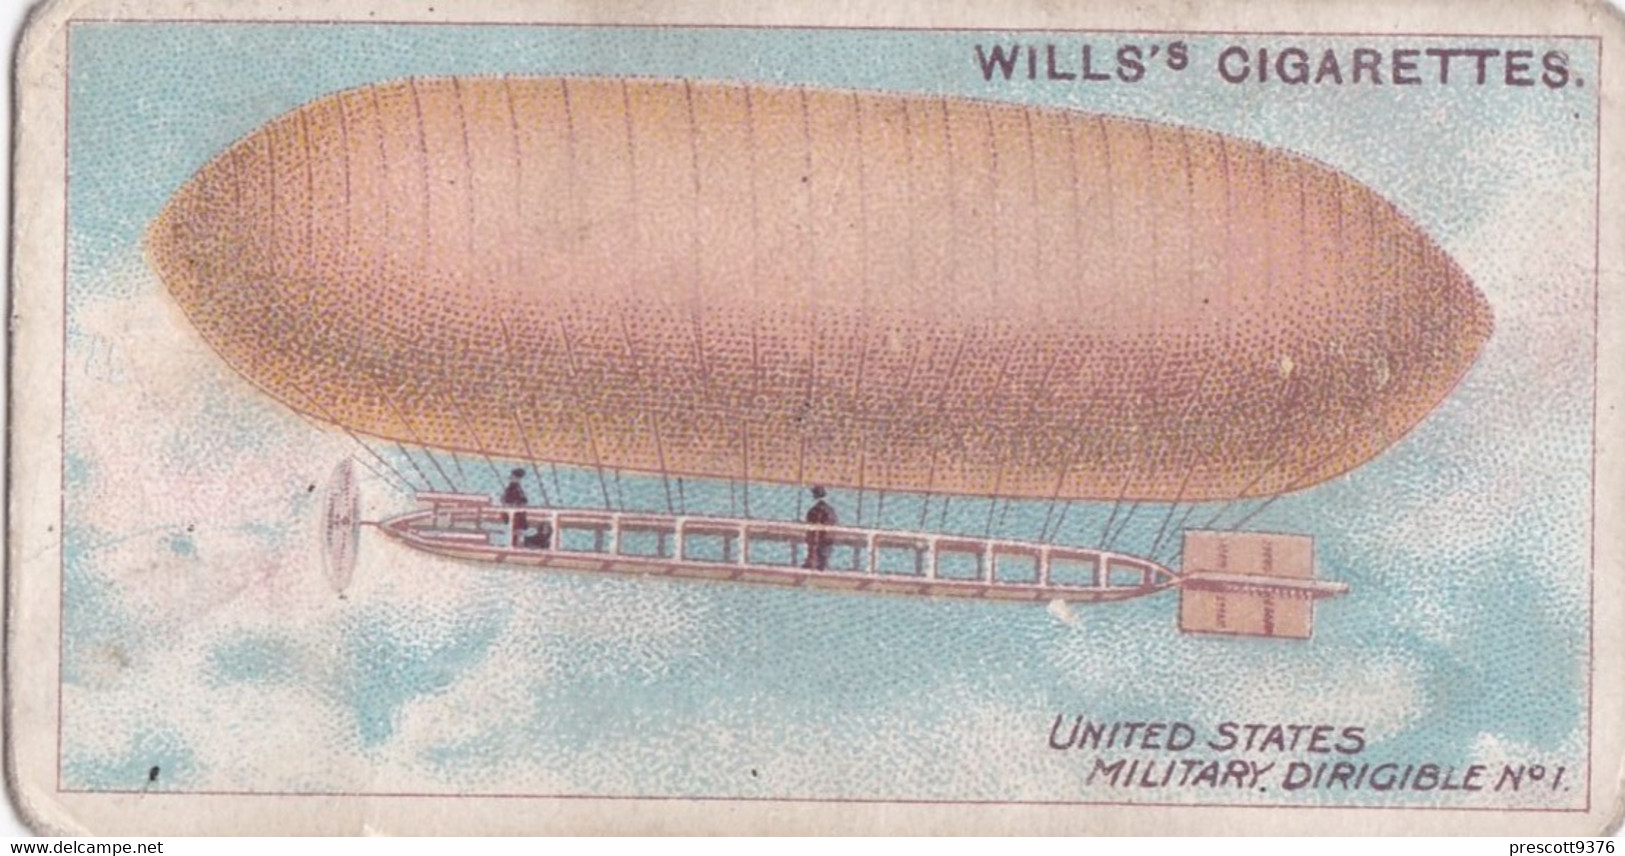 Aviation 1910  -   10 US Military Dirigible  - Wills Cigarette Card - Original  - Antique - Airship - Balloon - Wills